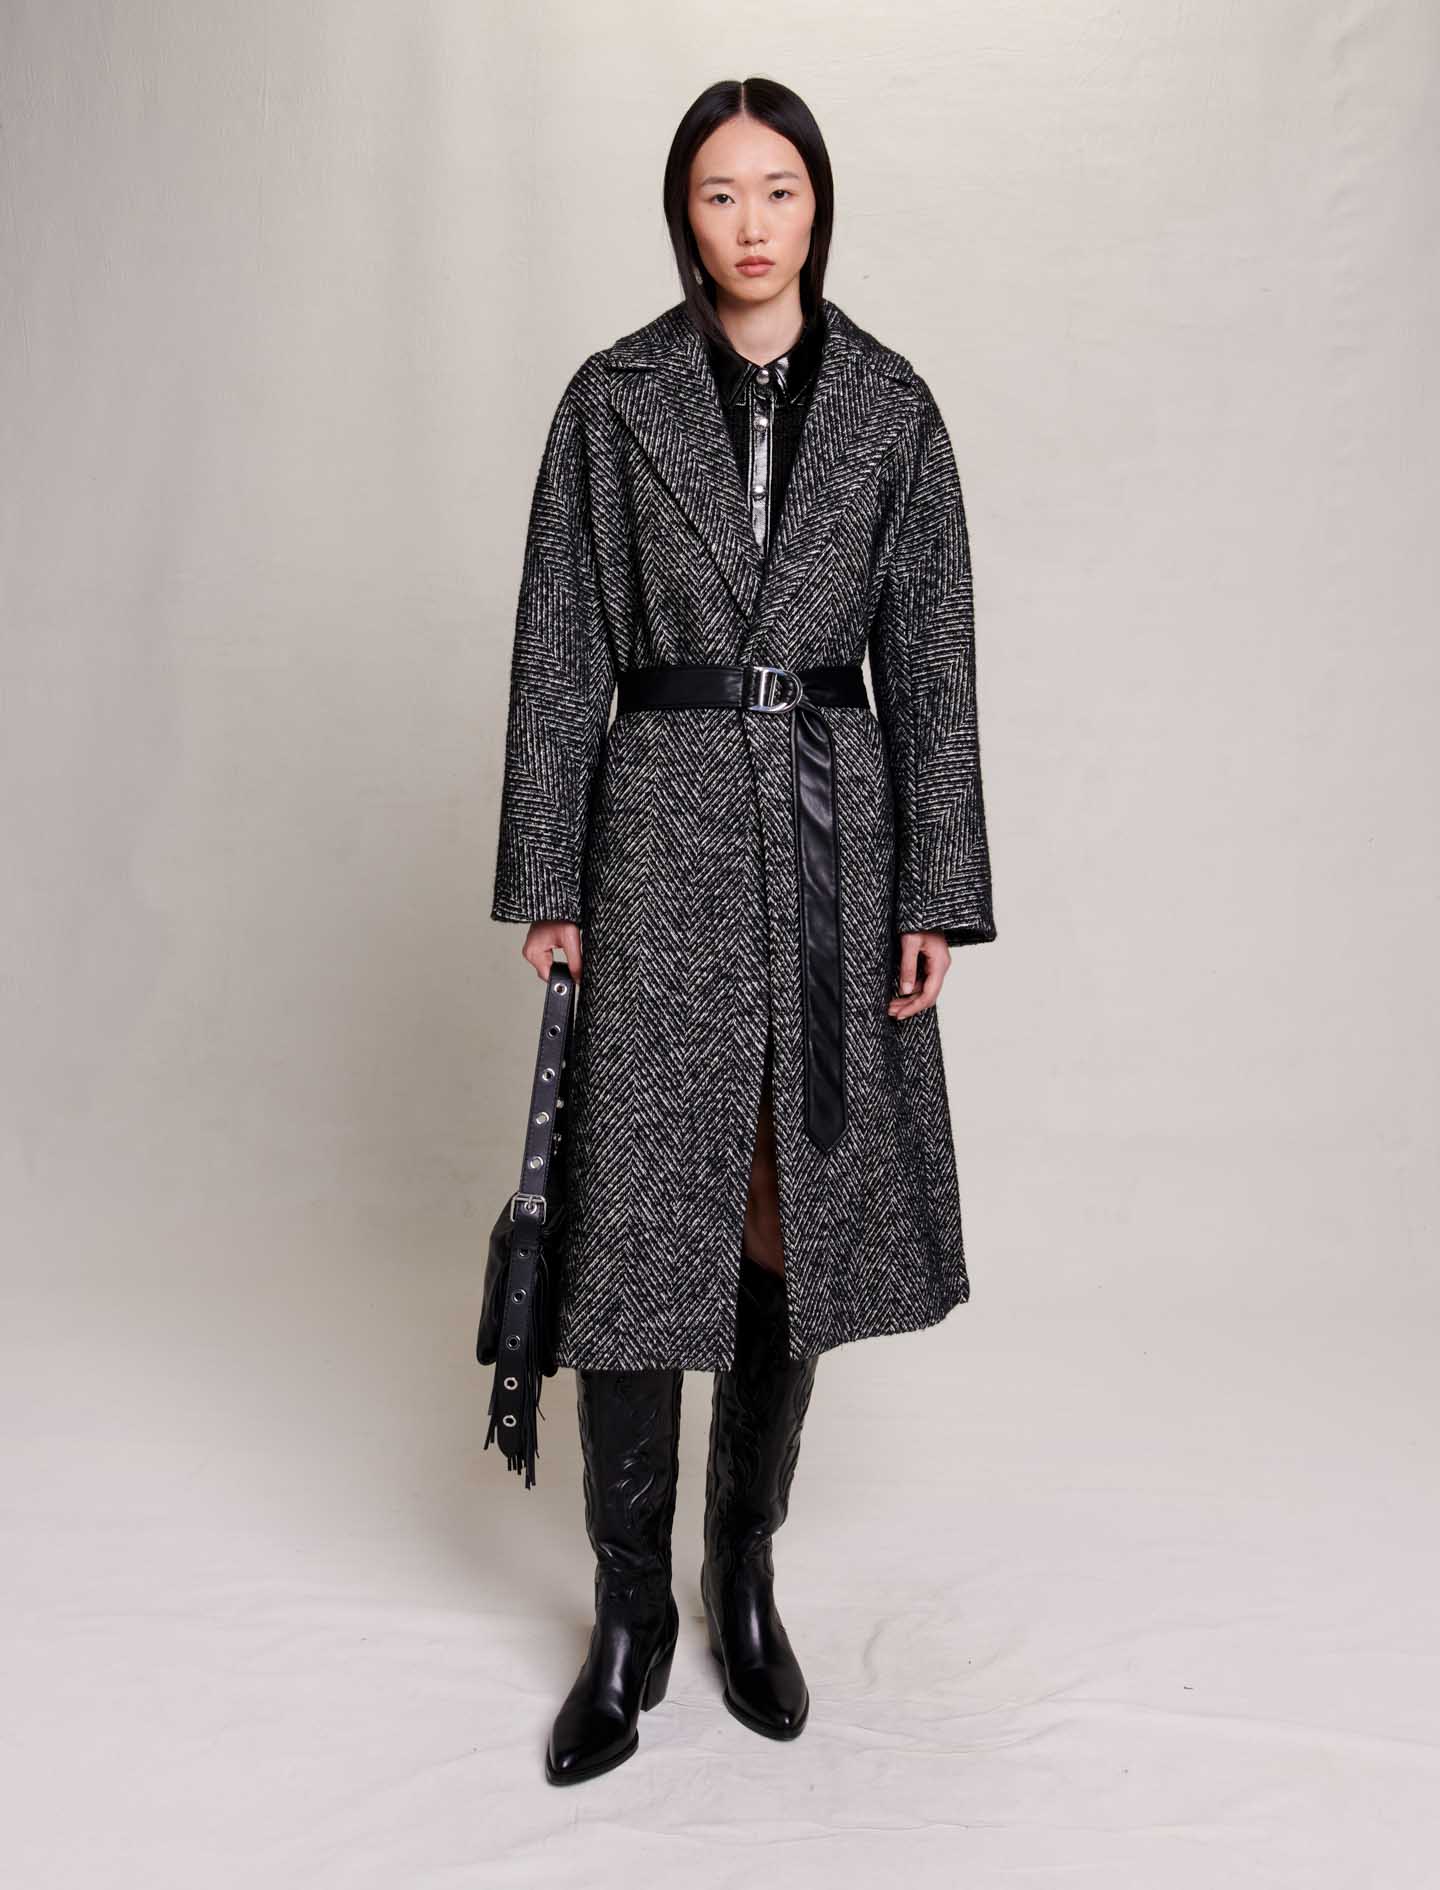 Maje Woman's polyester, Long herringbone coat for Fall/Winter, in color Black/White / Black